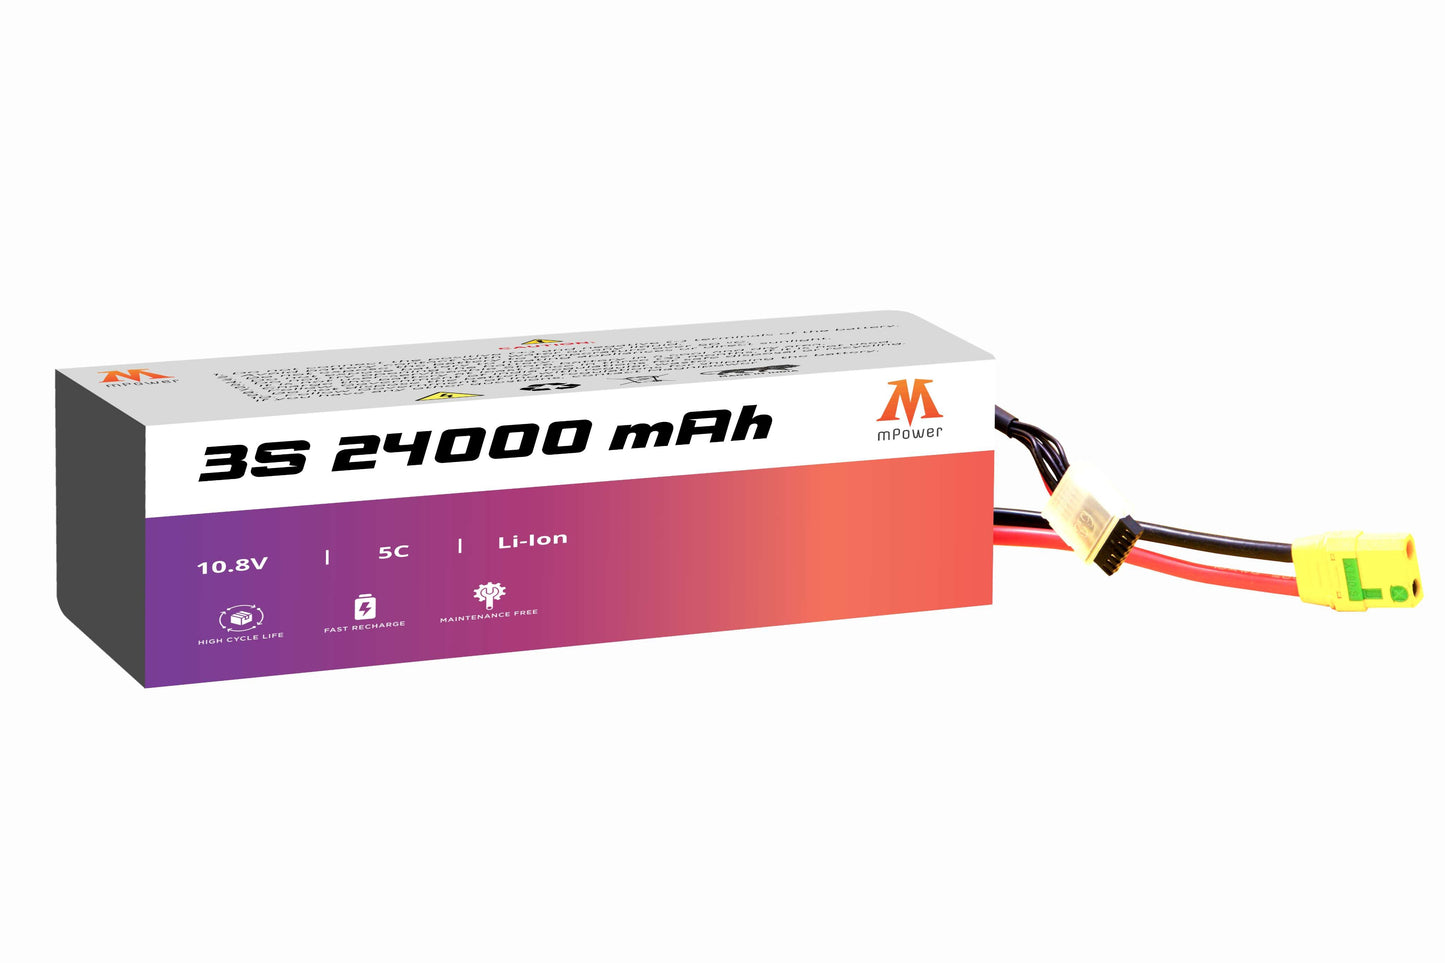 mPower 3S 24000mAh Lithium-Ion Battery for Surveillance Drones-mpowerlithium